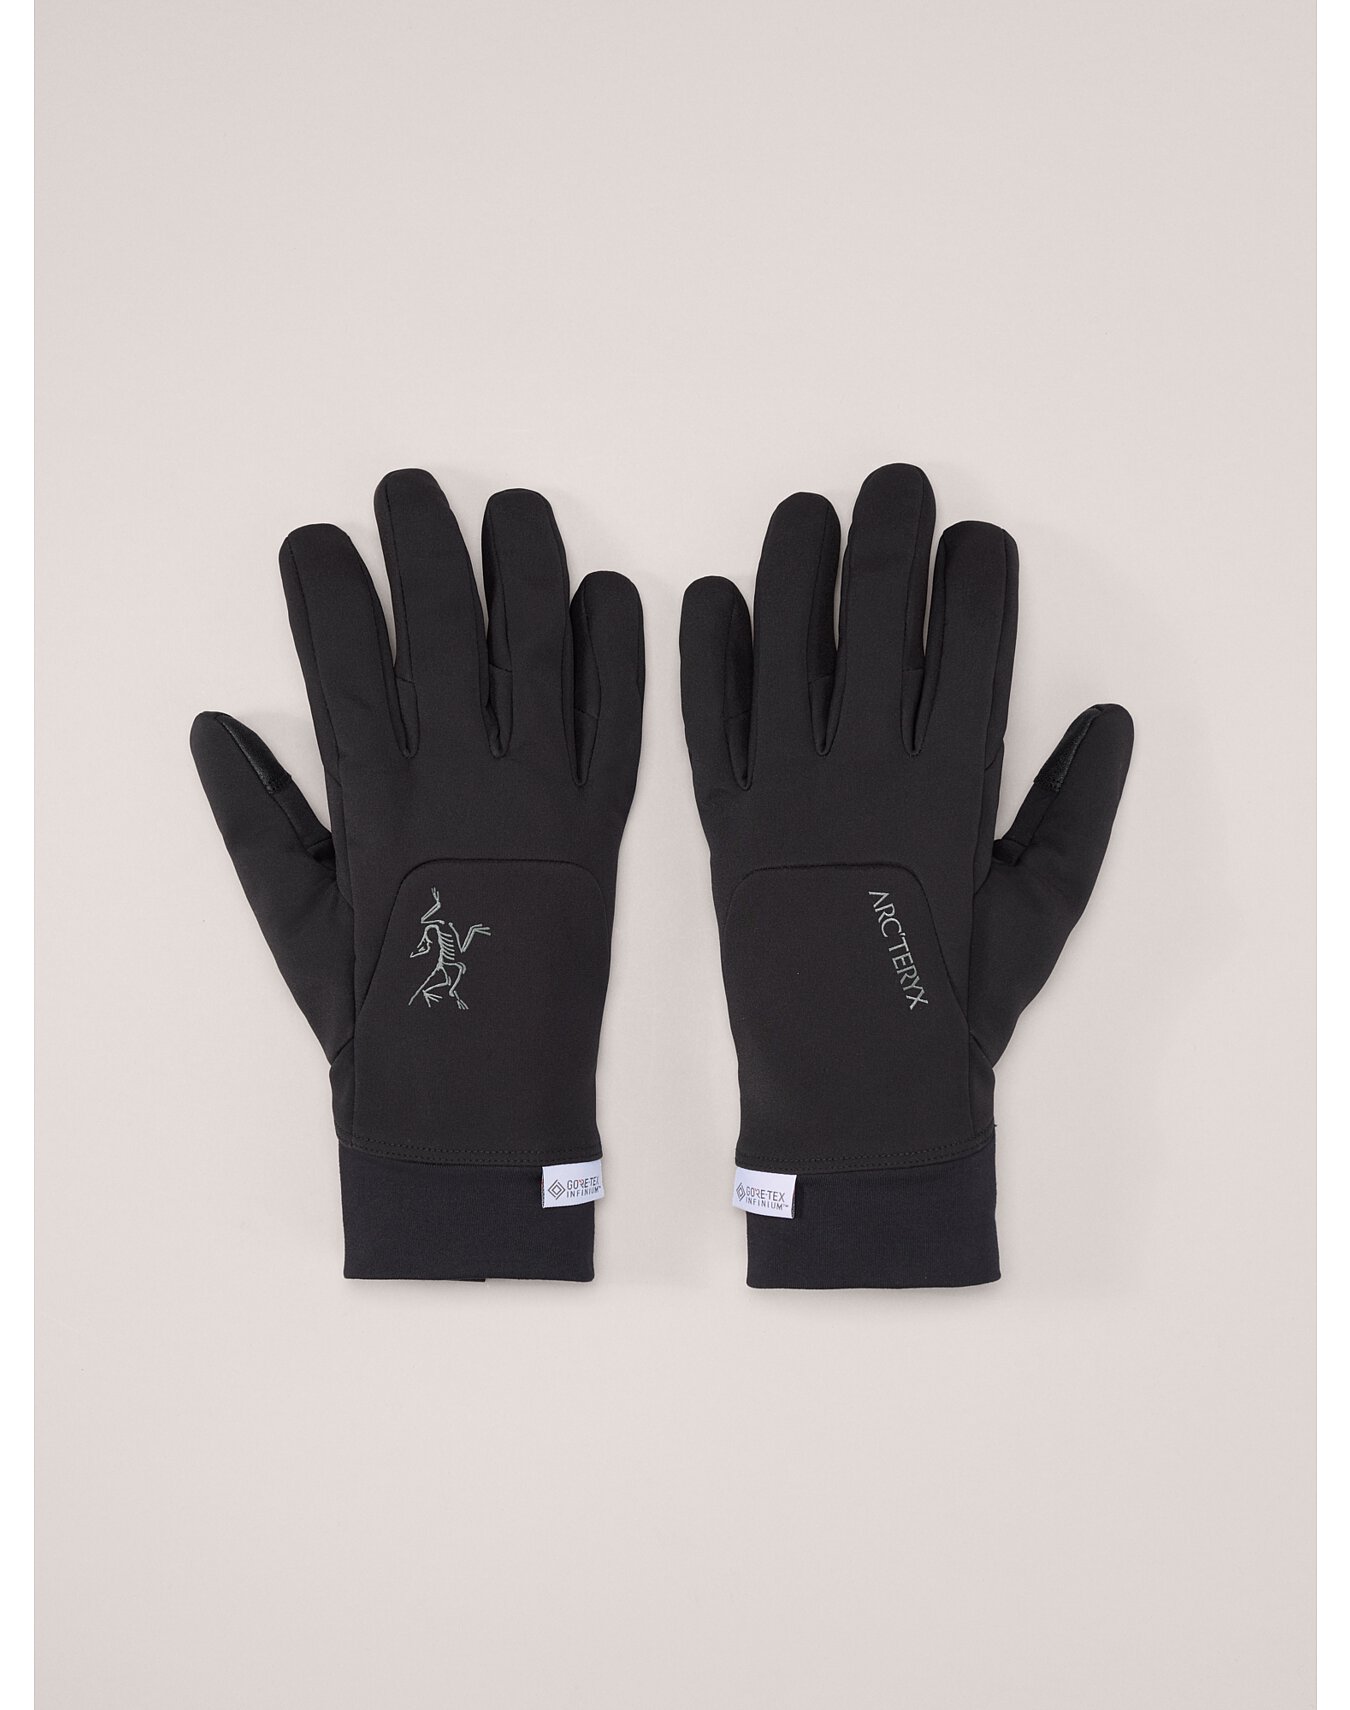 Men's Gloves | Arc'teryx